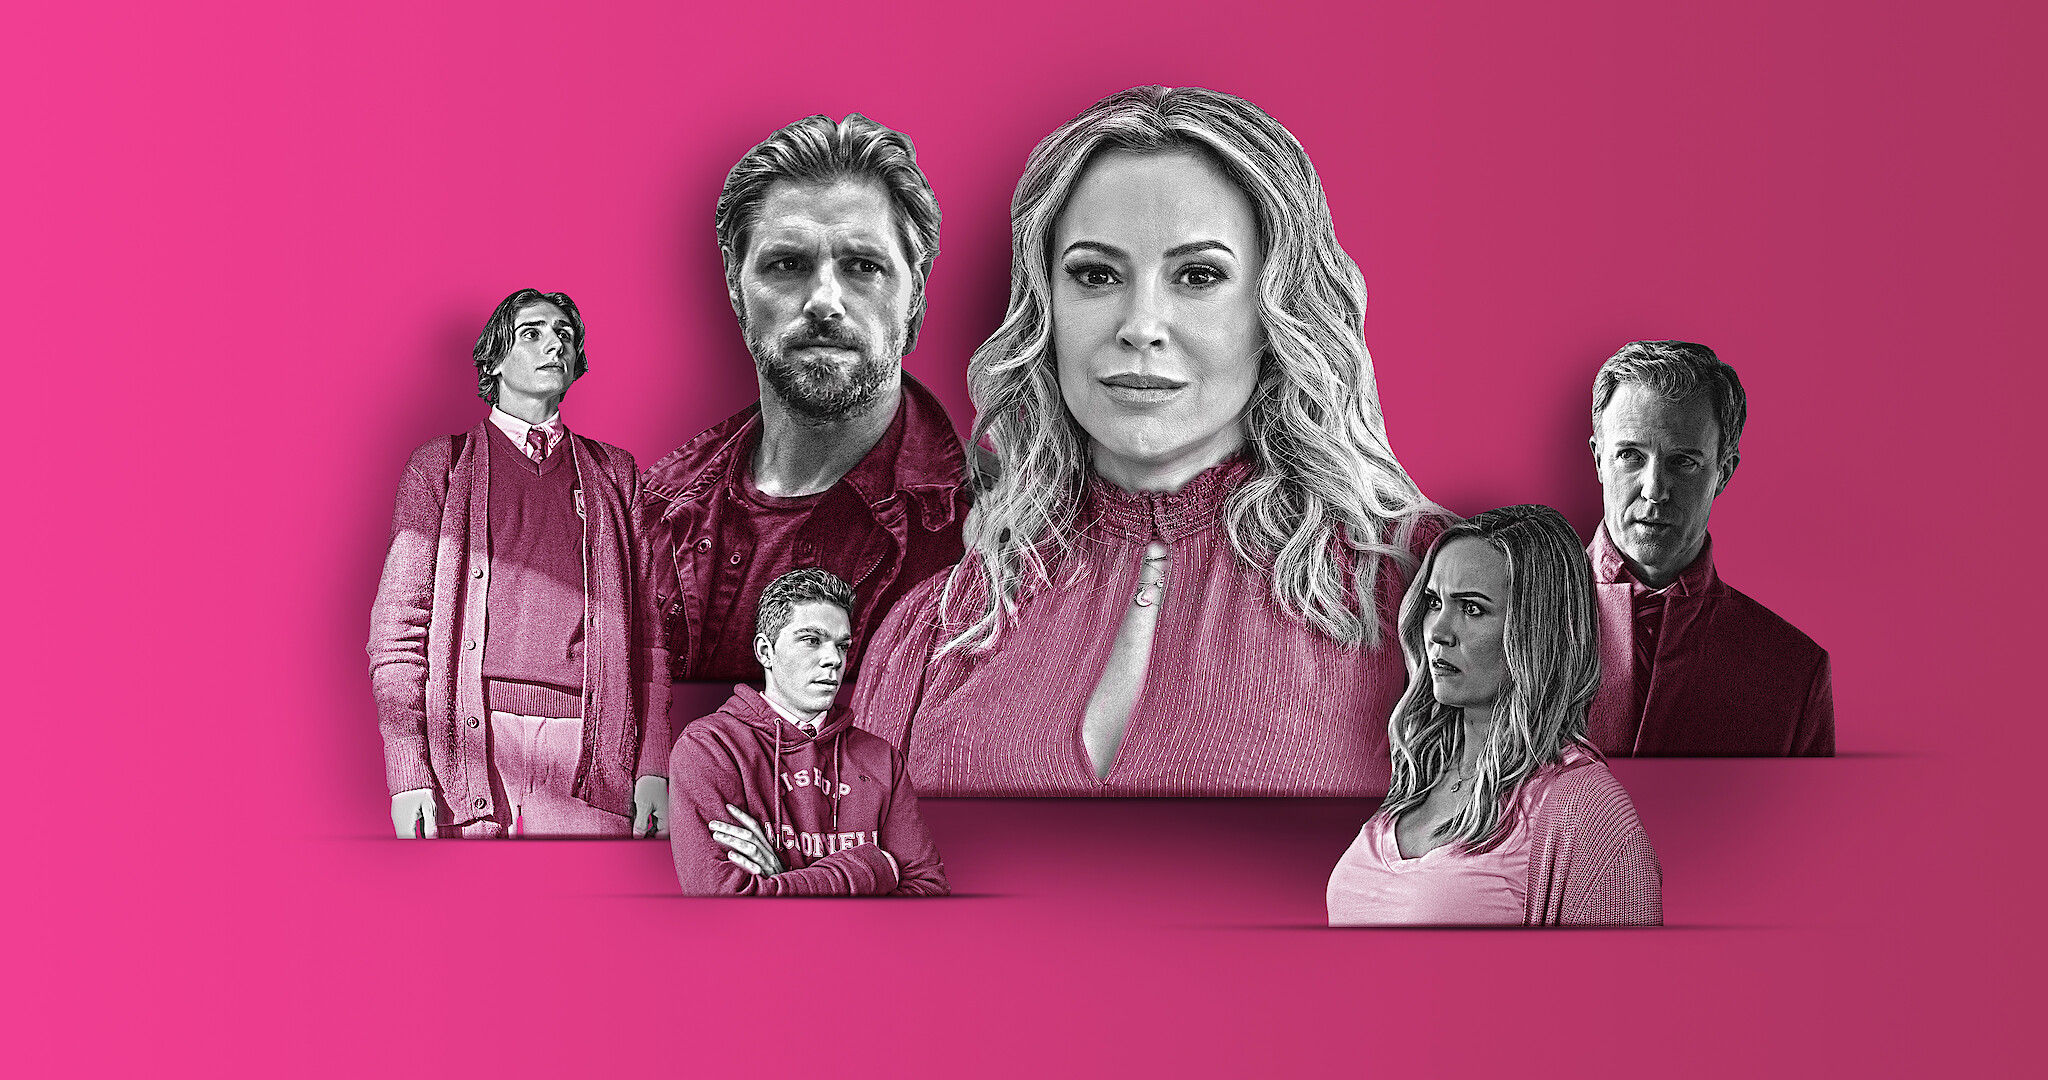 Obliterated Cast Guide: Meet Shelley Hennig, Nick Zano and More - Netflix  Tudum